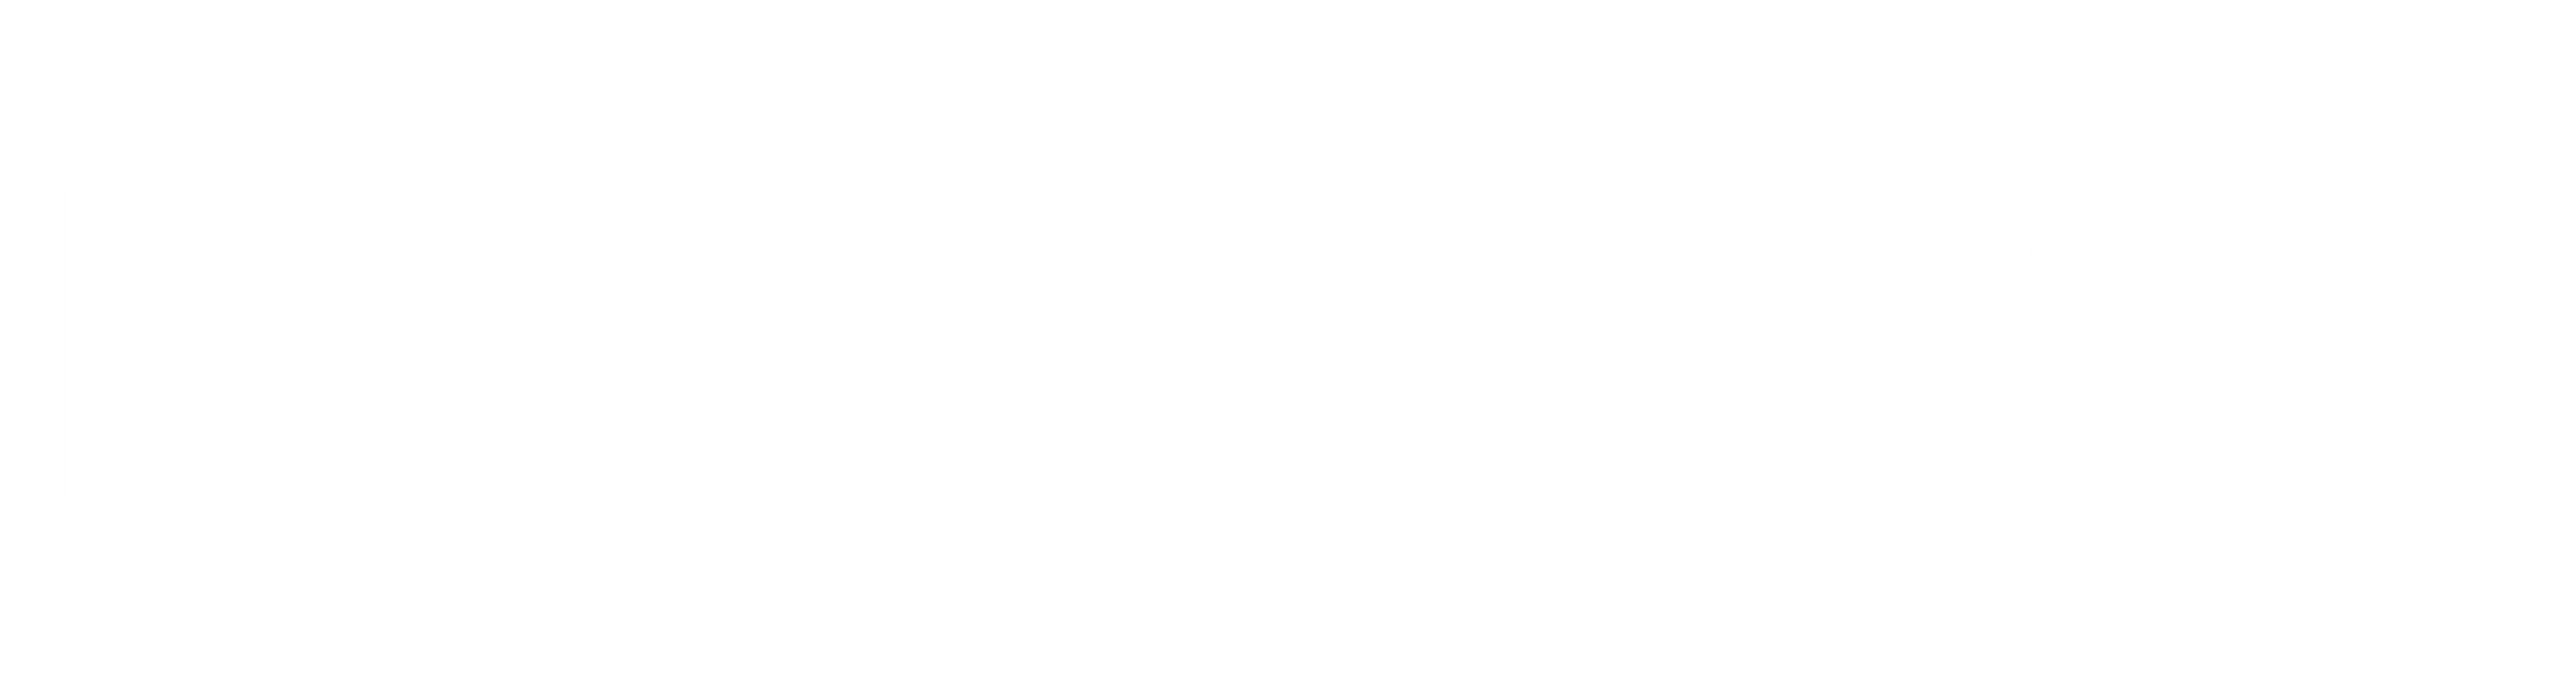 Project13 Logo